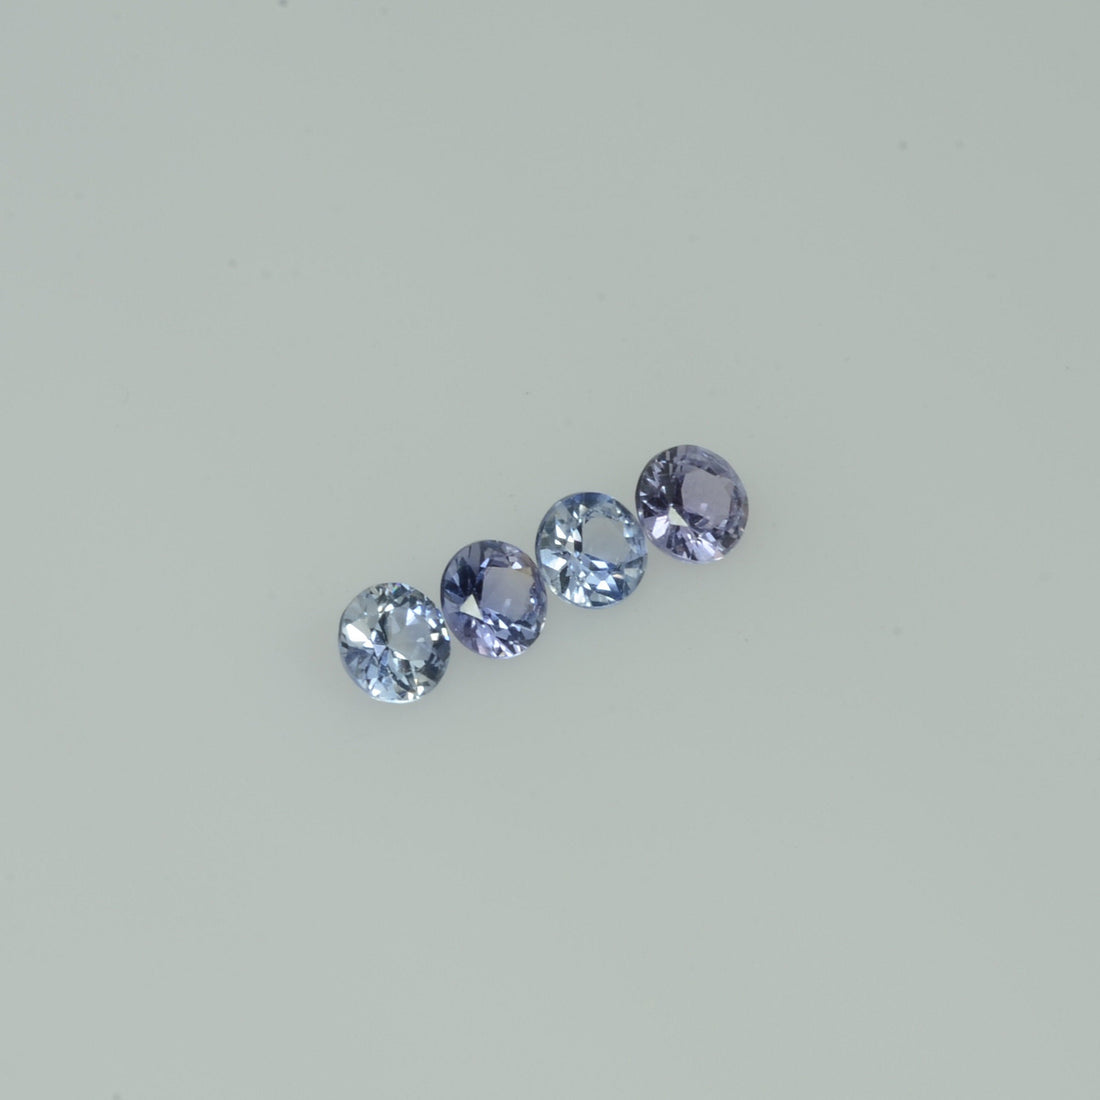 2.5-4.5 mm Natural Pastel Purple Sapphire Loose Cleanish Gemstone Round Diamond Cut